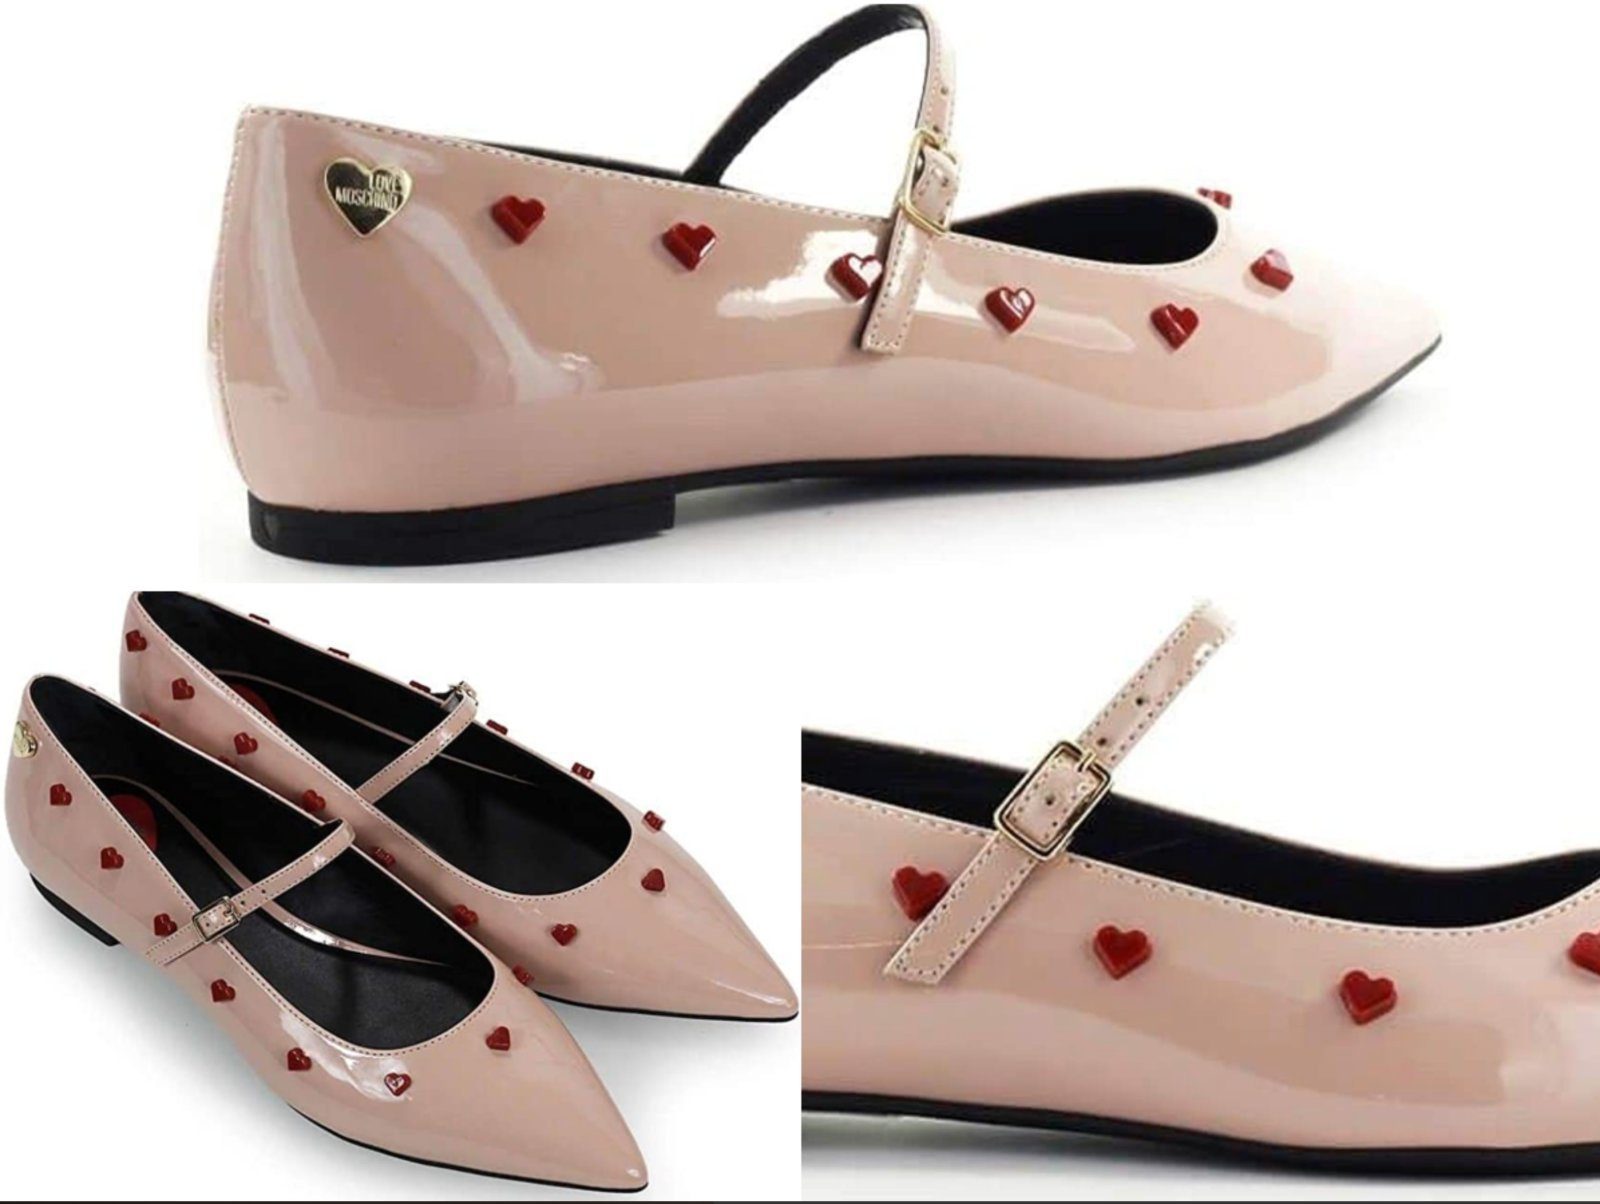 Moschino Love Moschino Iconic Ballerina Patent Leather Lackleder Flats Взуття S Кросівки Балетки